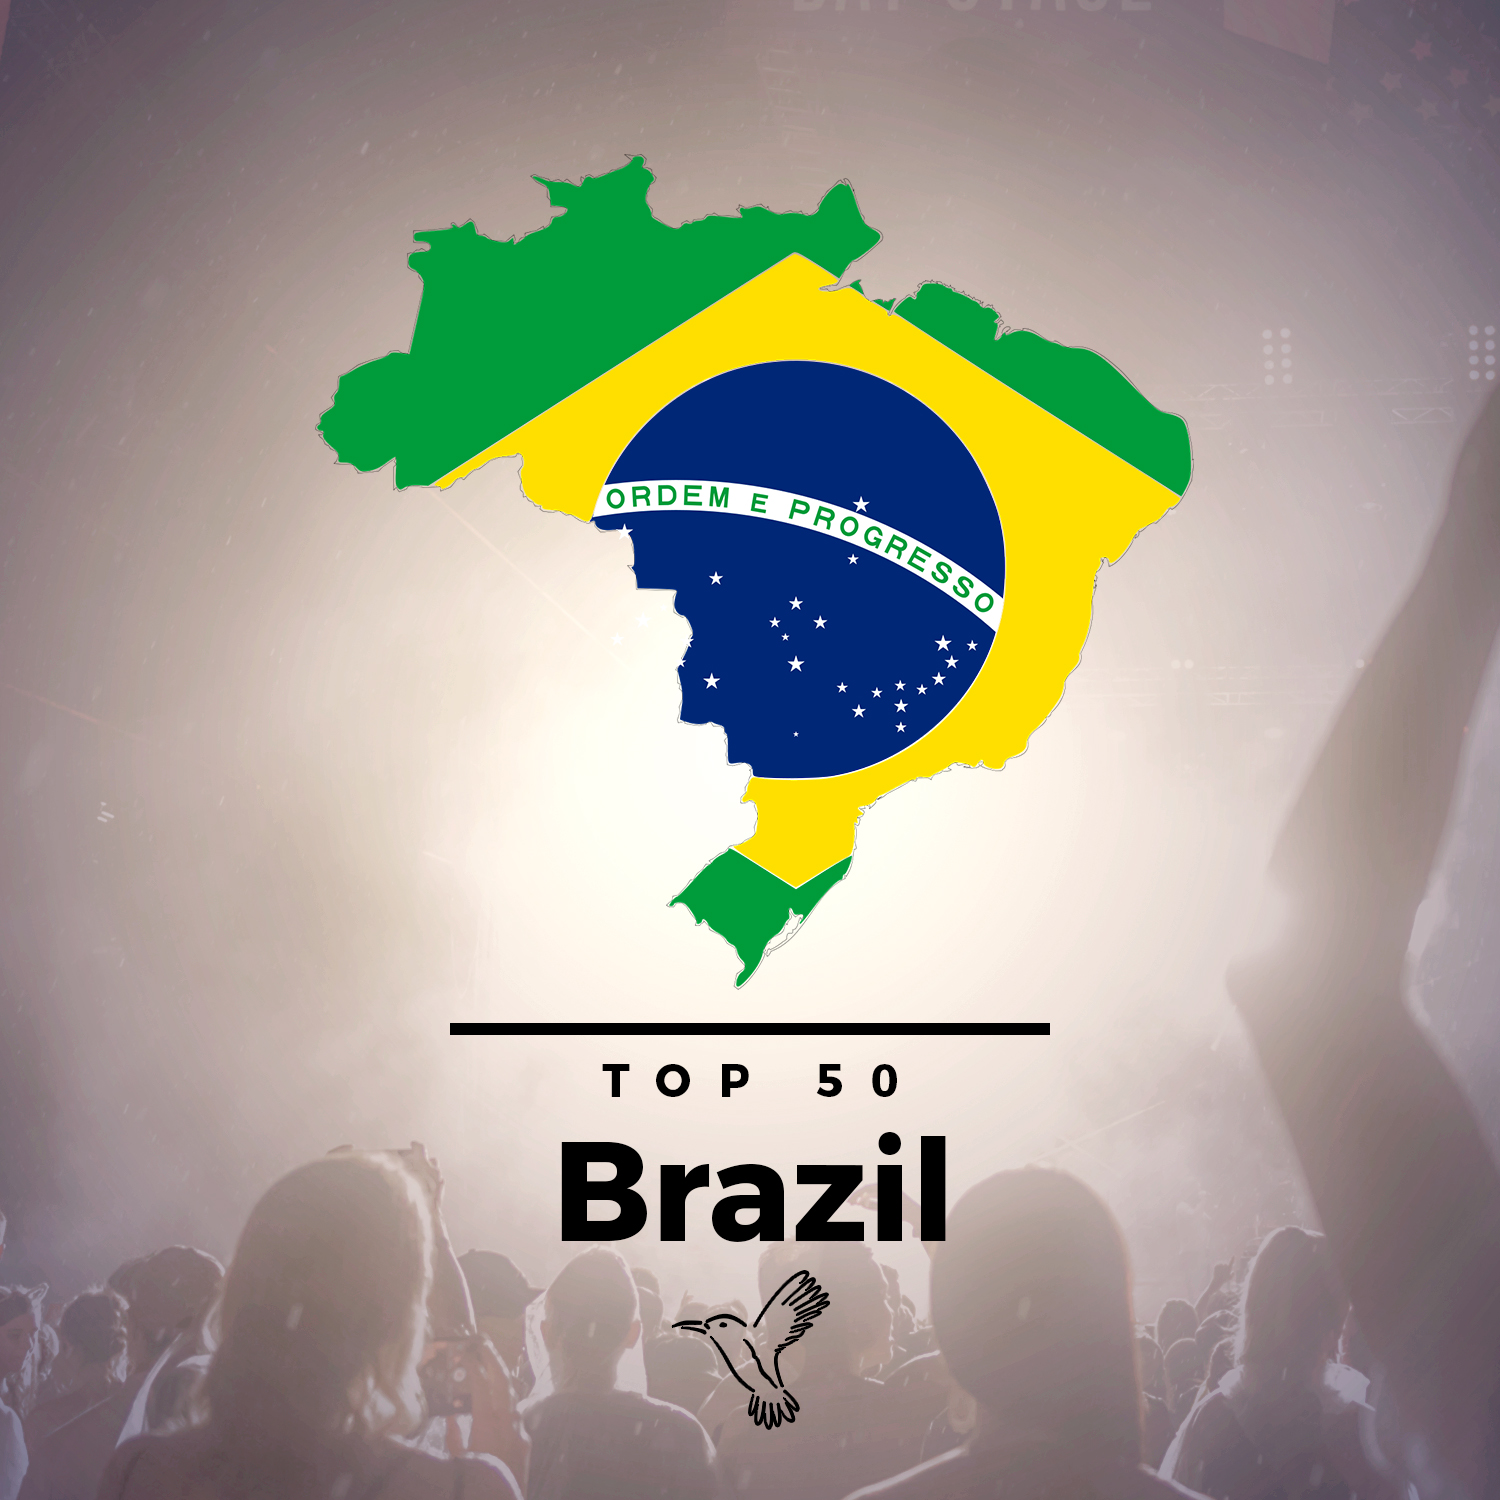 Top 50 Brasil - FEVEREIRO 2021 - playlist by 222flloc67saw7kkqrxkbatza